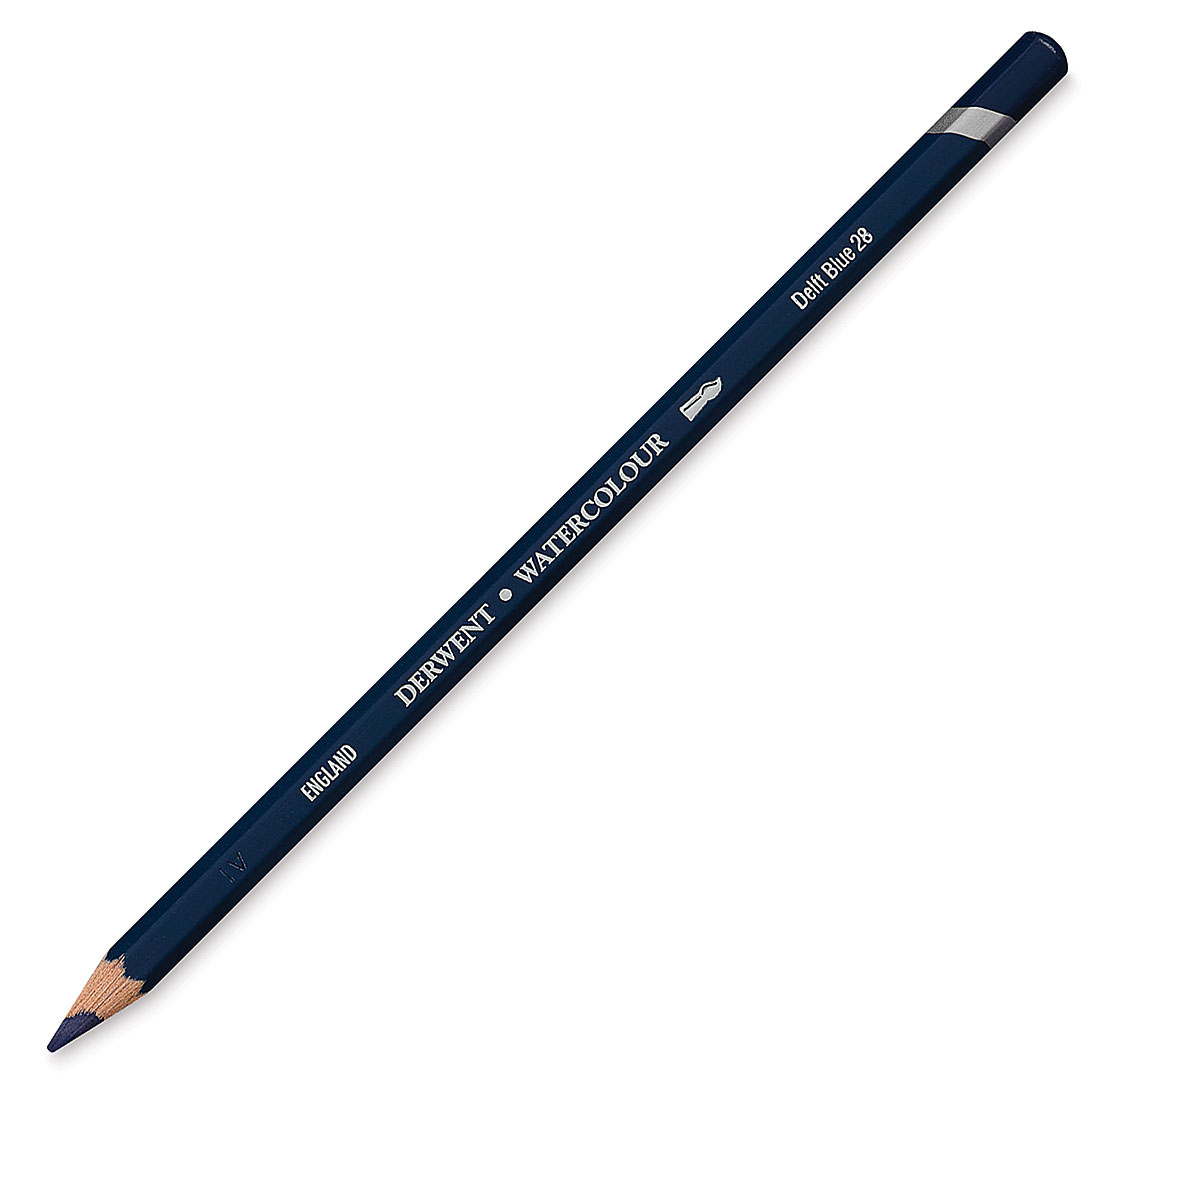 Derwent : Watercolor Pencil : Delft Blue